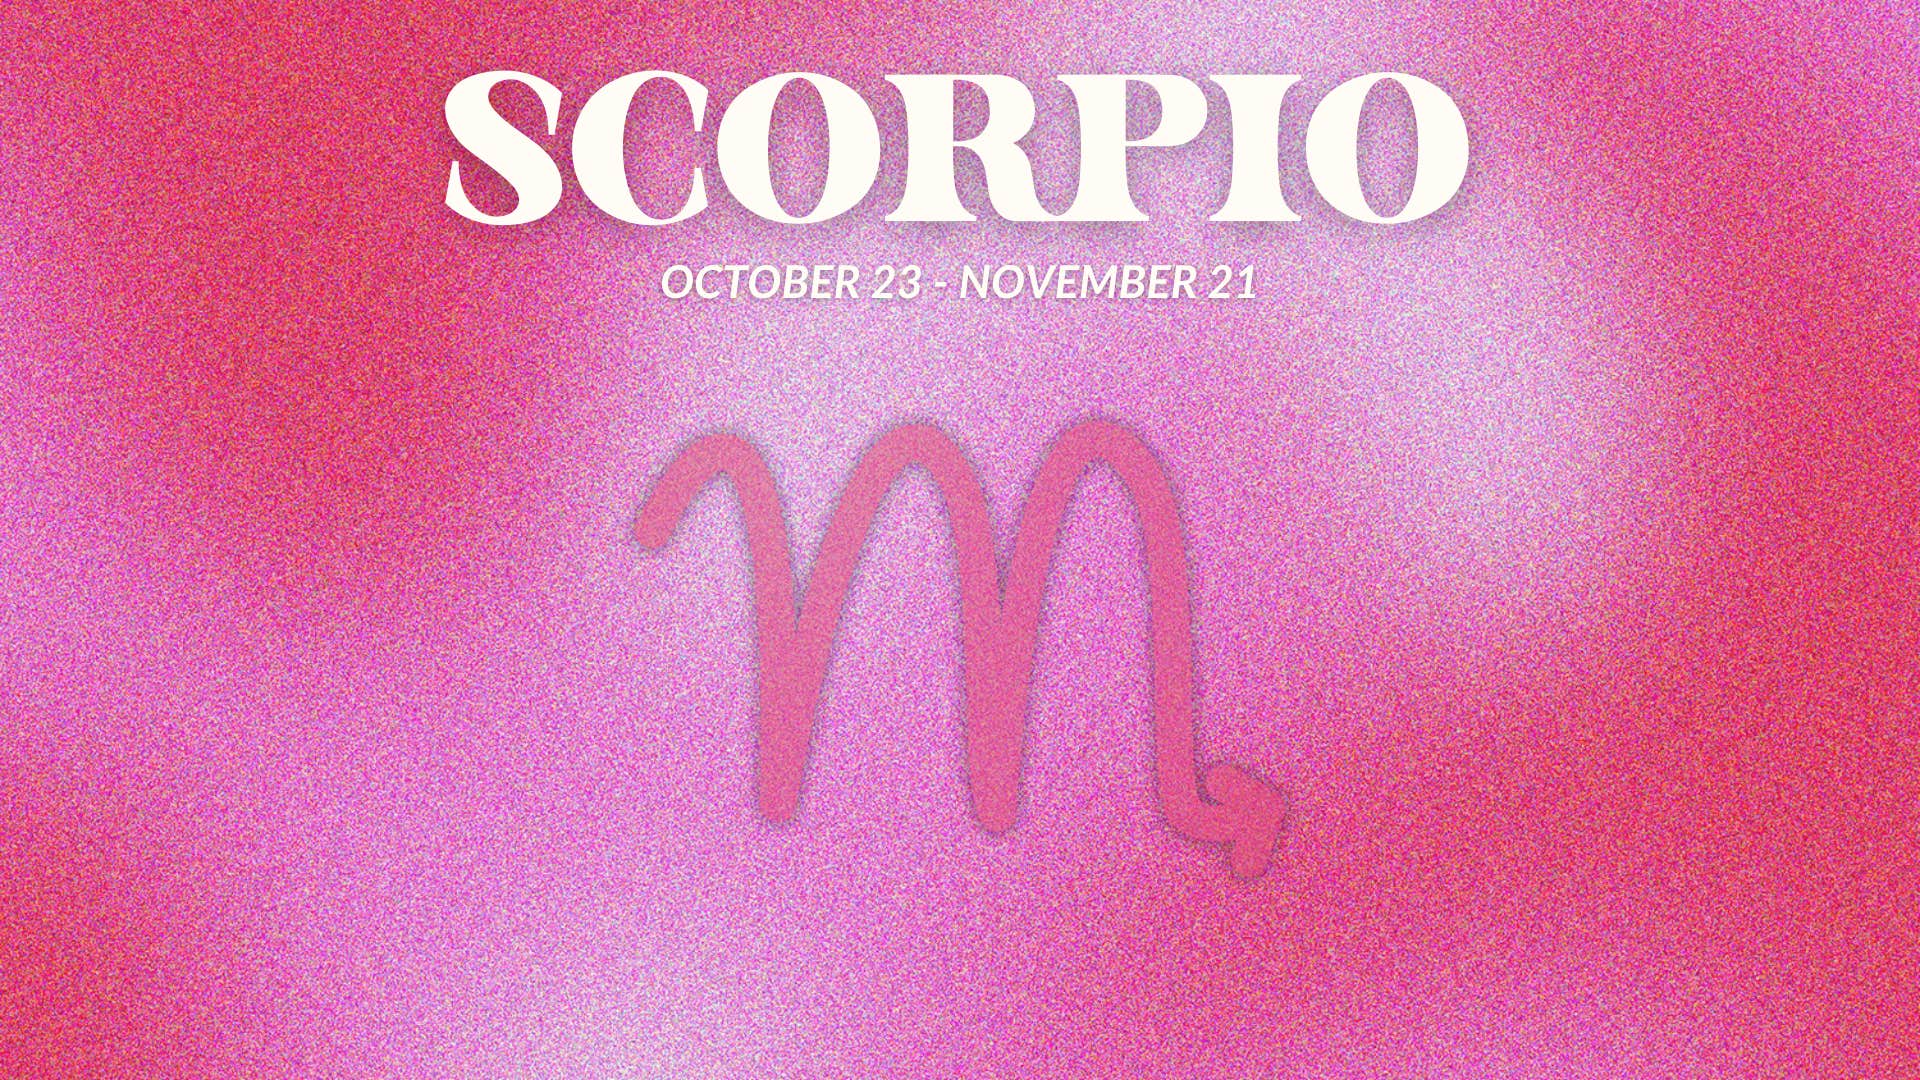 biggest relationship fear for scorpio